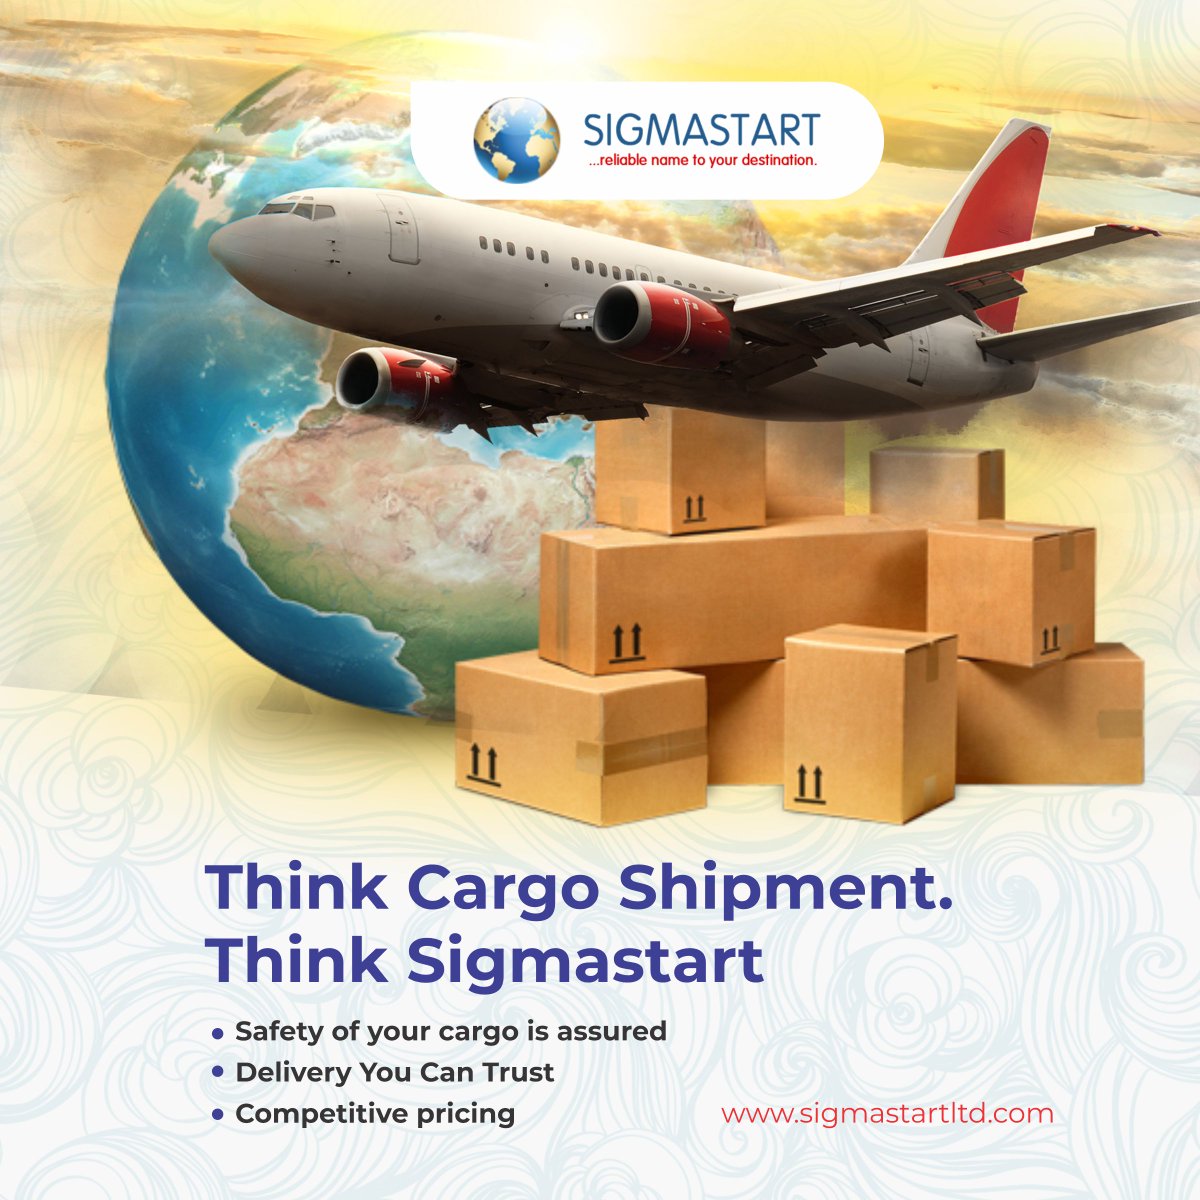 Think Cargo Shipment.
Think Sigmastart.

We are Sigmastart...reliable name to your destination.

#doorstepdelivery #corporateclient #nigeriansindiaspora #london #cargotonaija #uk2naija #uk #southlondon #nigeriansindiaspora #china #france #germany #india #sea #shipping #airfreight